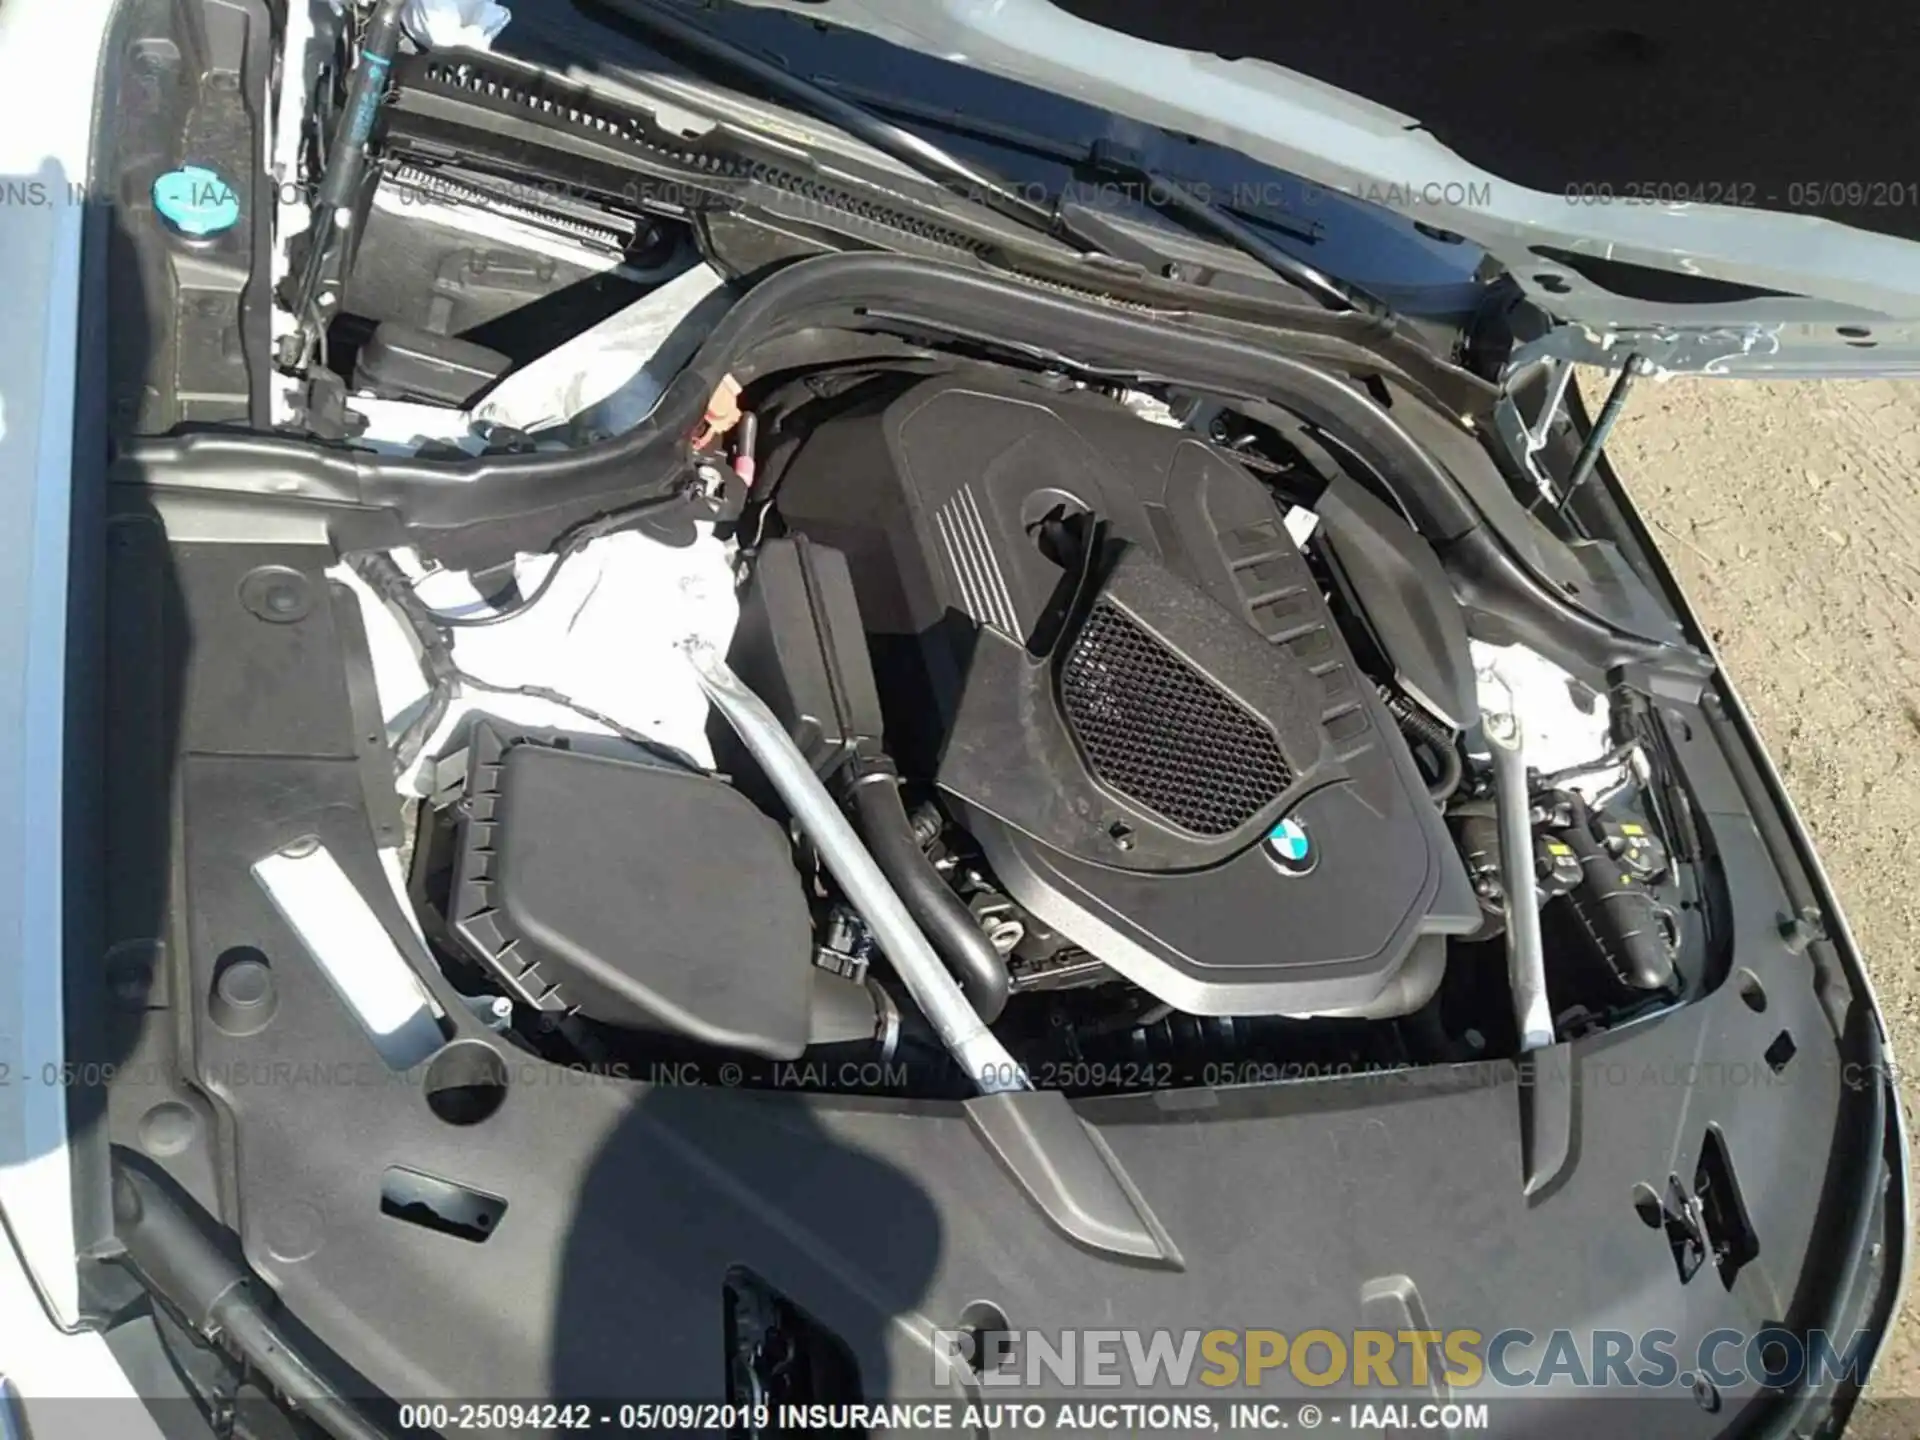 10 Photograph of a damaged car WBAJV6C55KBK08654 BMW 640 2019